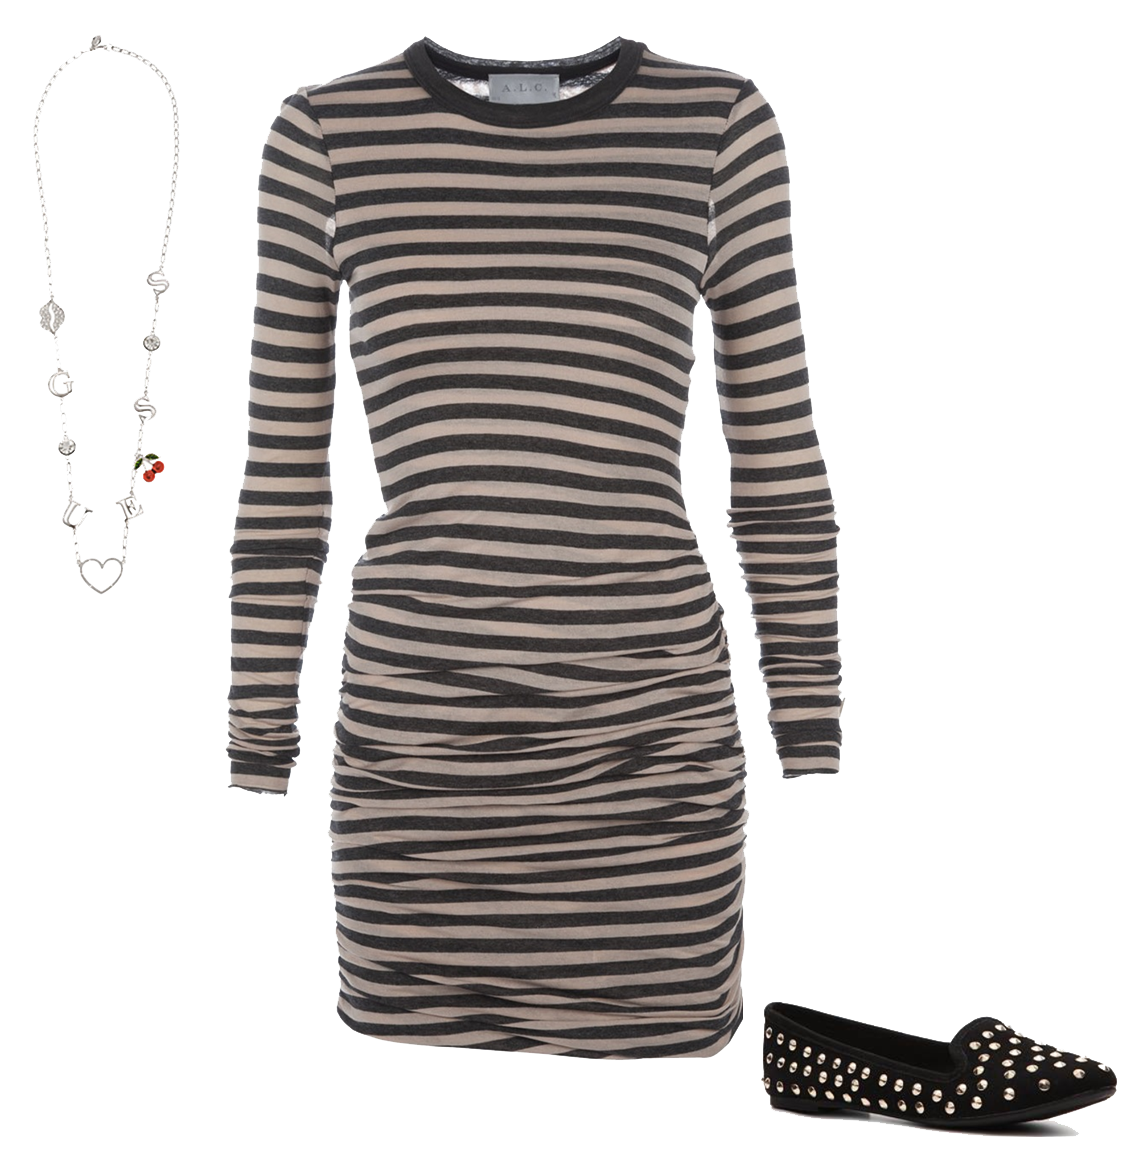 Striped Dress Image PNG Image